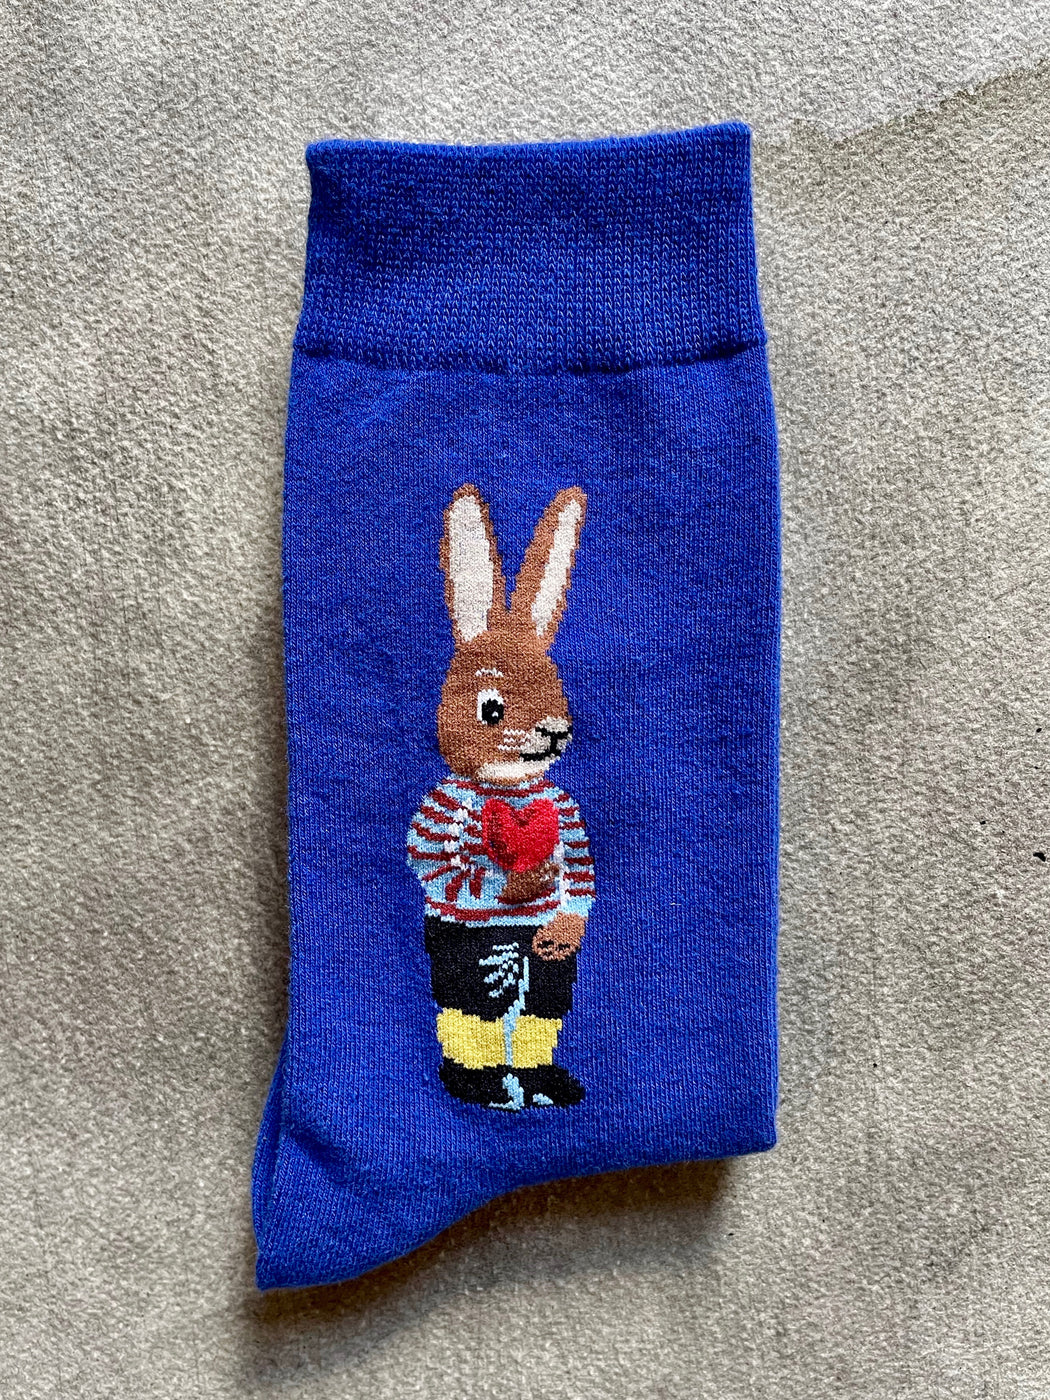 "Bunny Love" Socks by Nathalie Lete